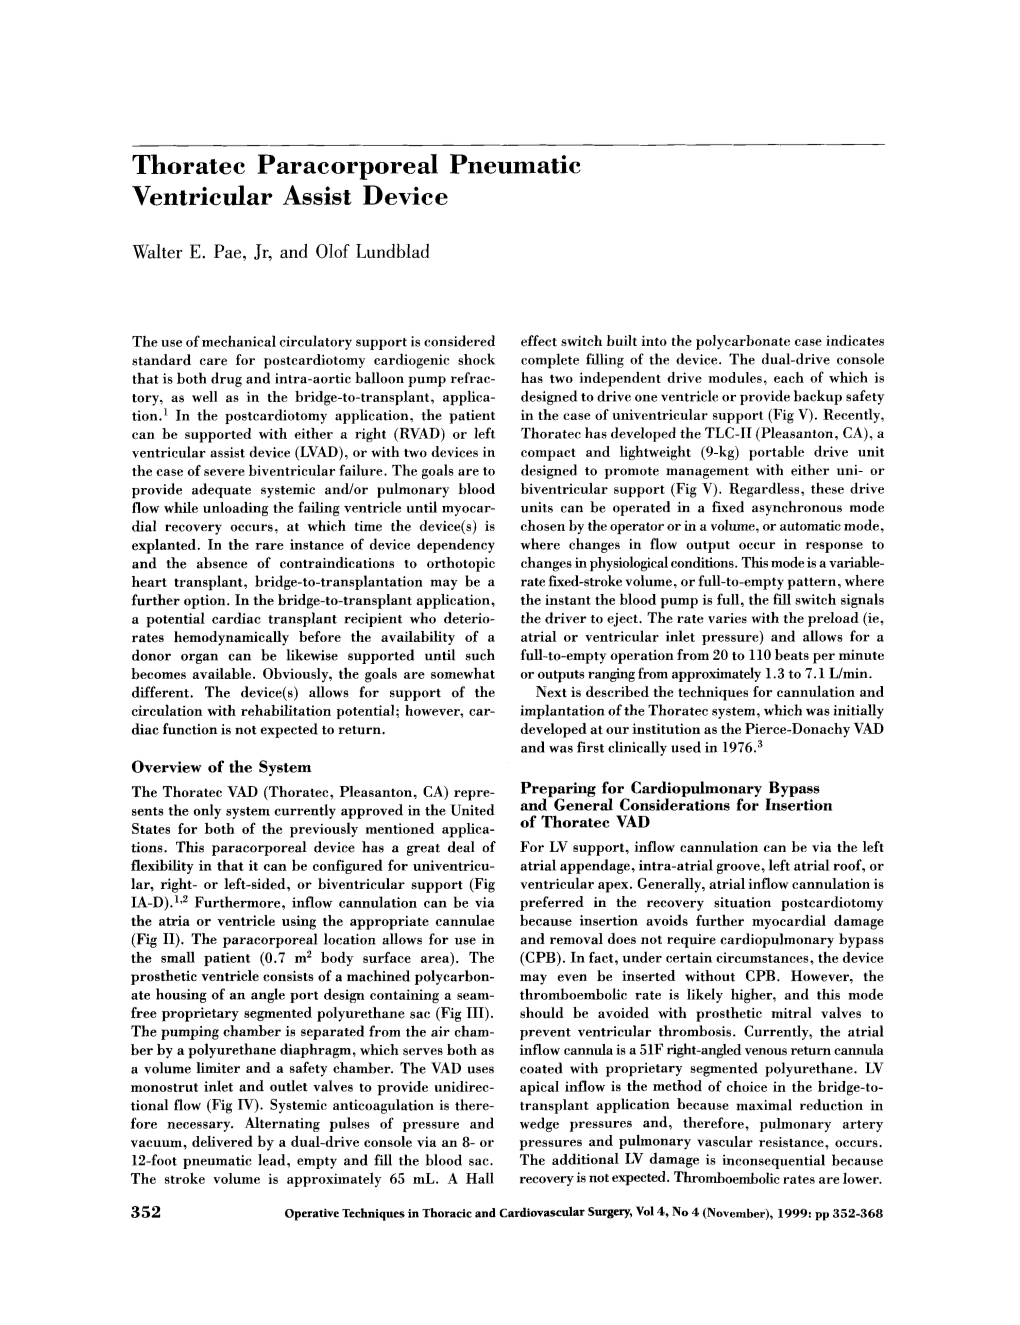 Thoratec Paracorporeal Pneumatic Ventricular Assist Device